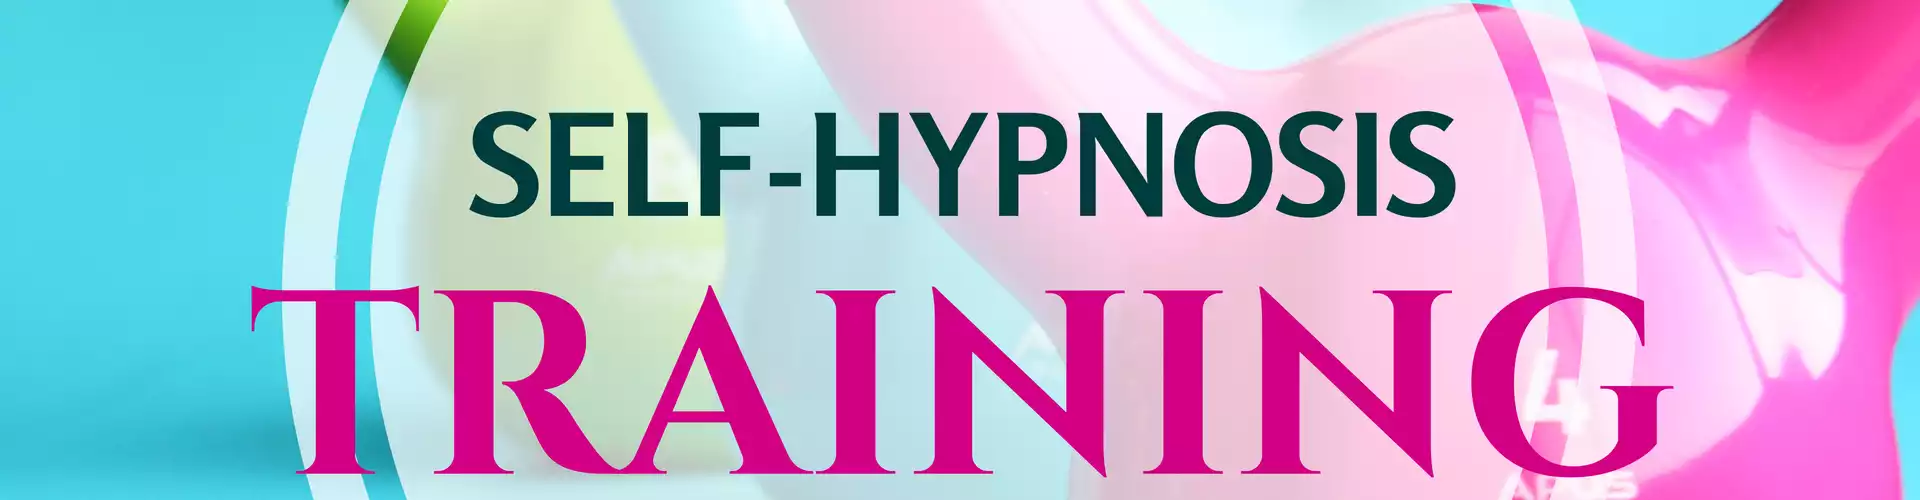 Self-hypnosis Training